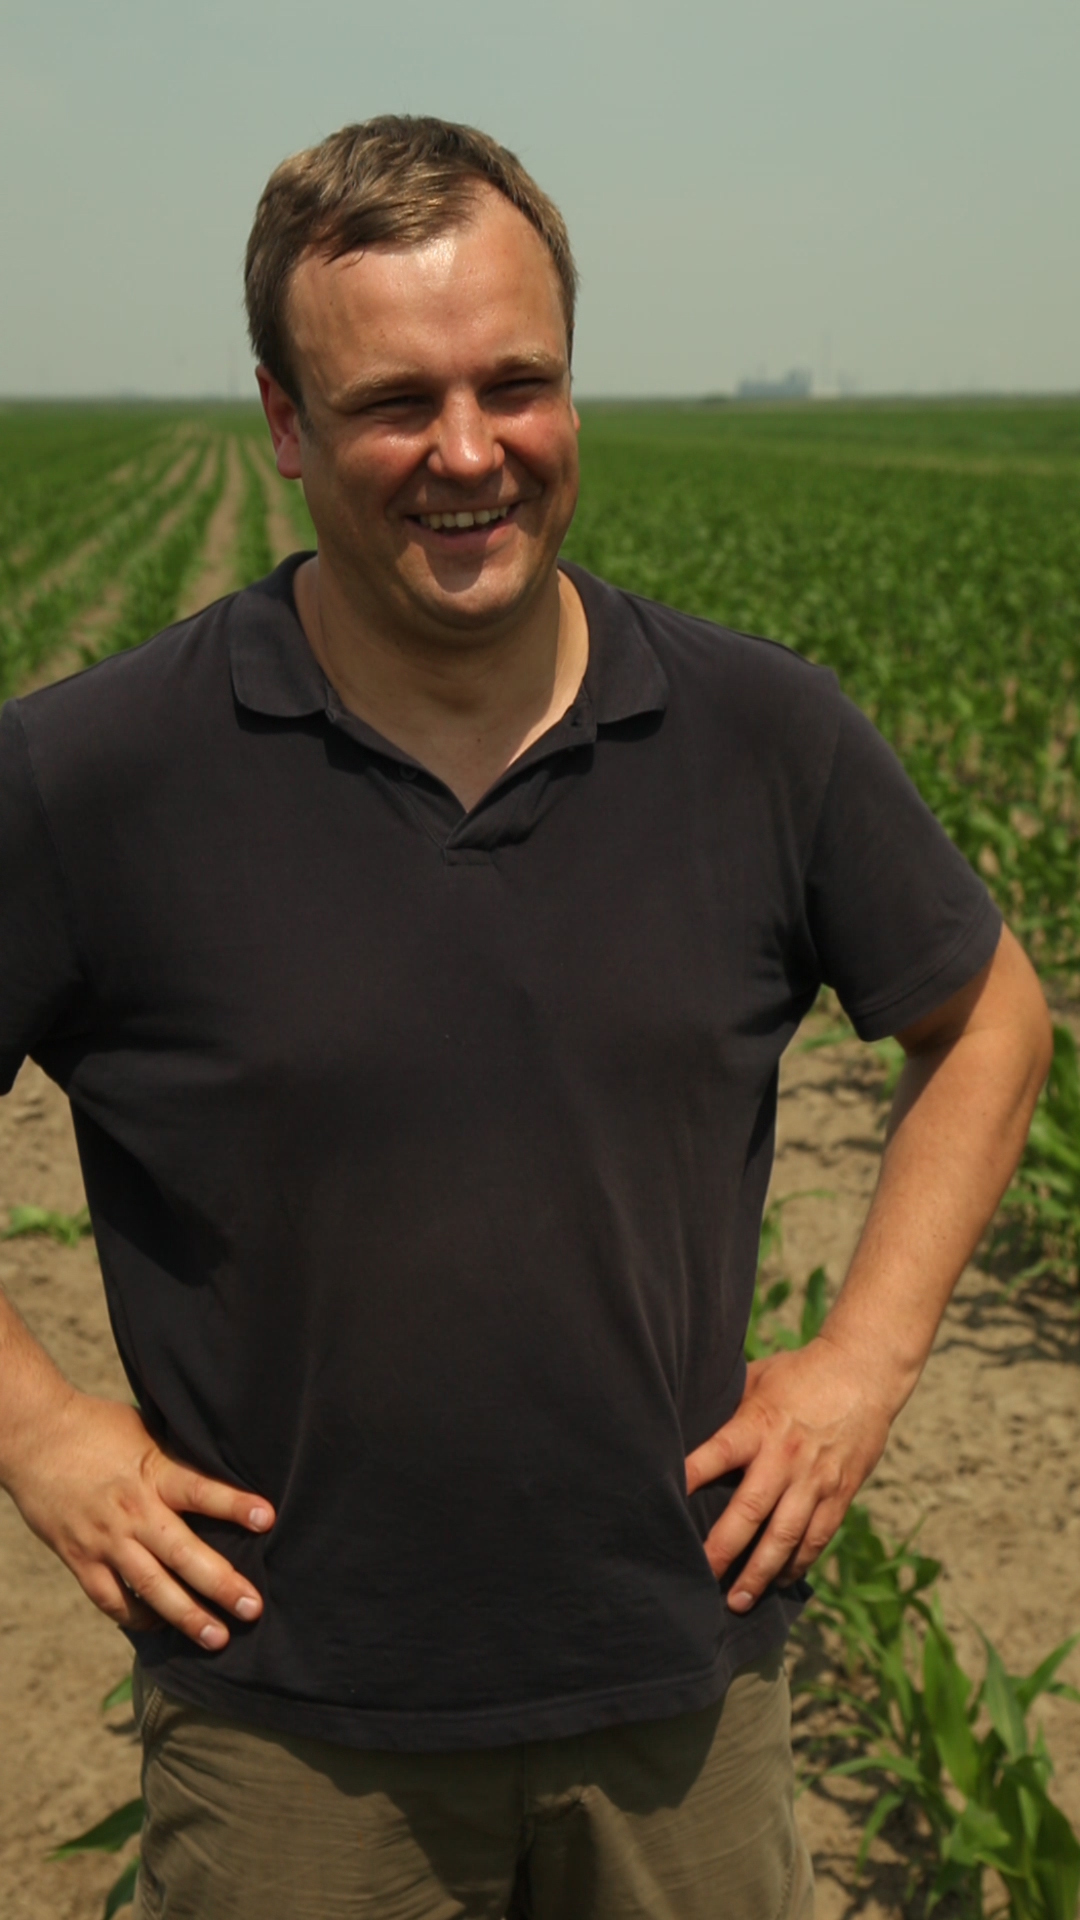 Jordbrukaren Claus Schmoldt